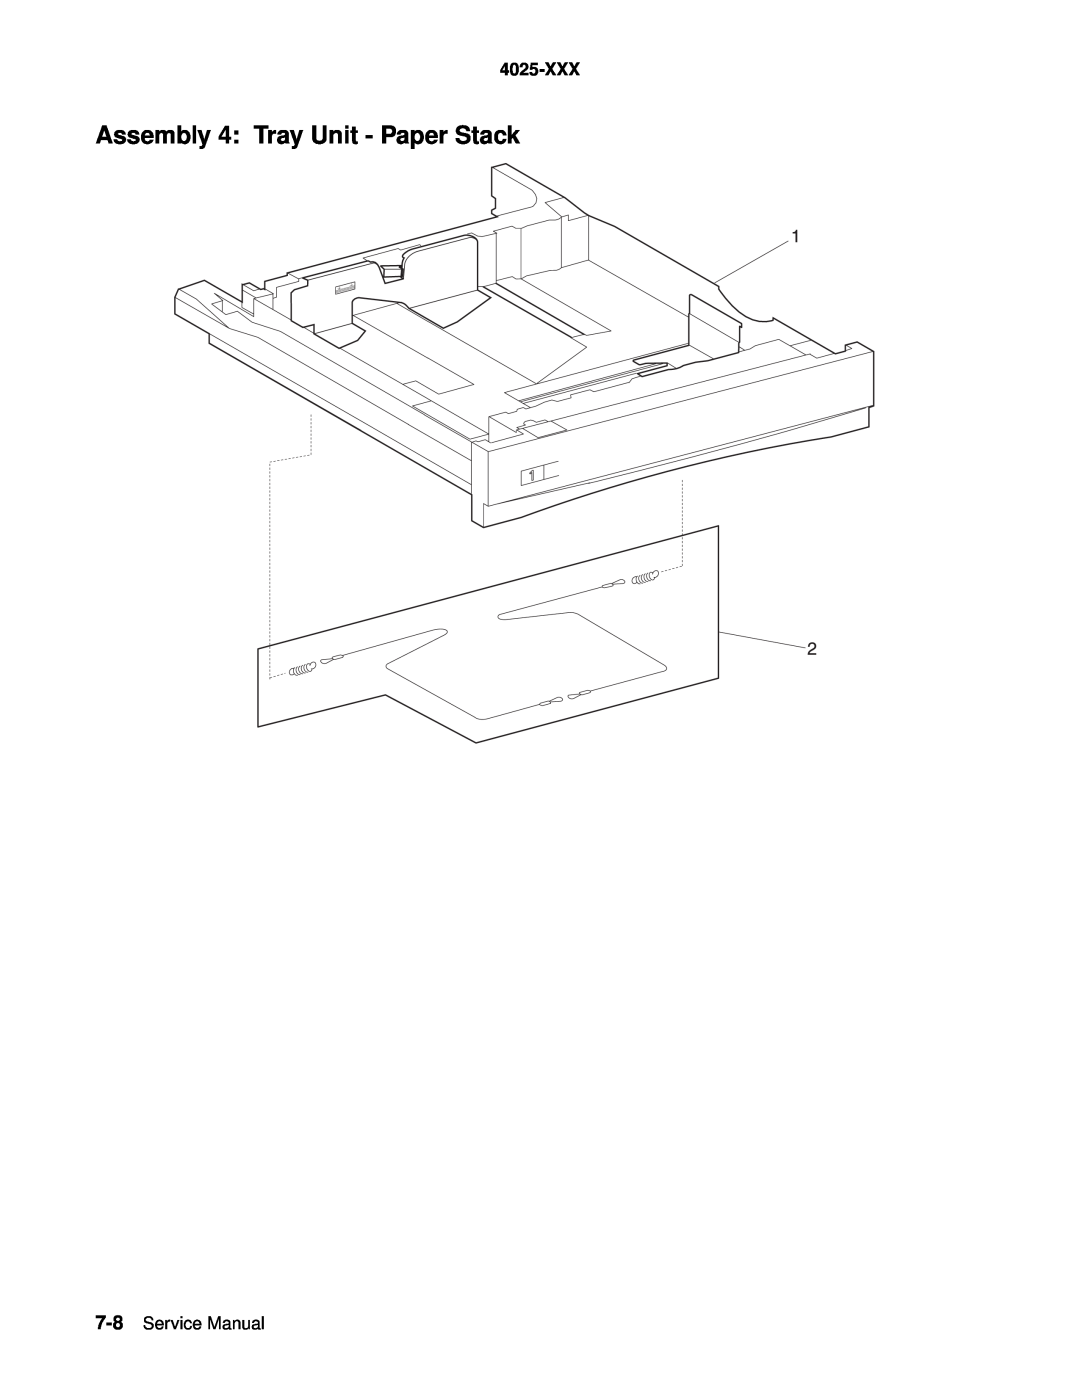 Lexmark W820 service manual Assembly 4 Tray Unit - Paper Stack, 4025-XXX 